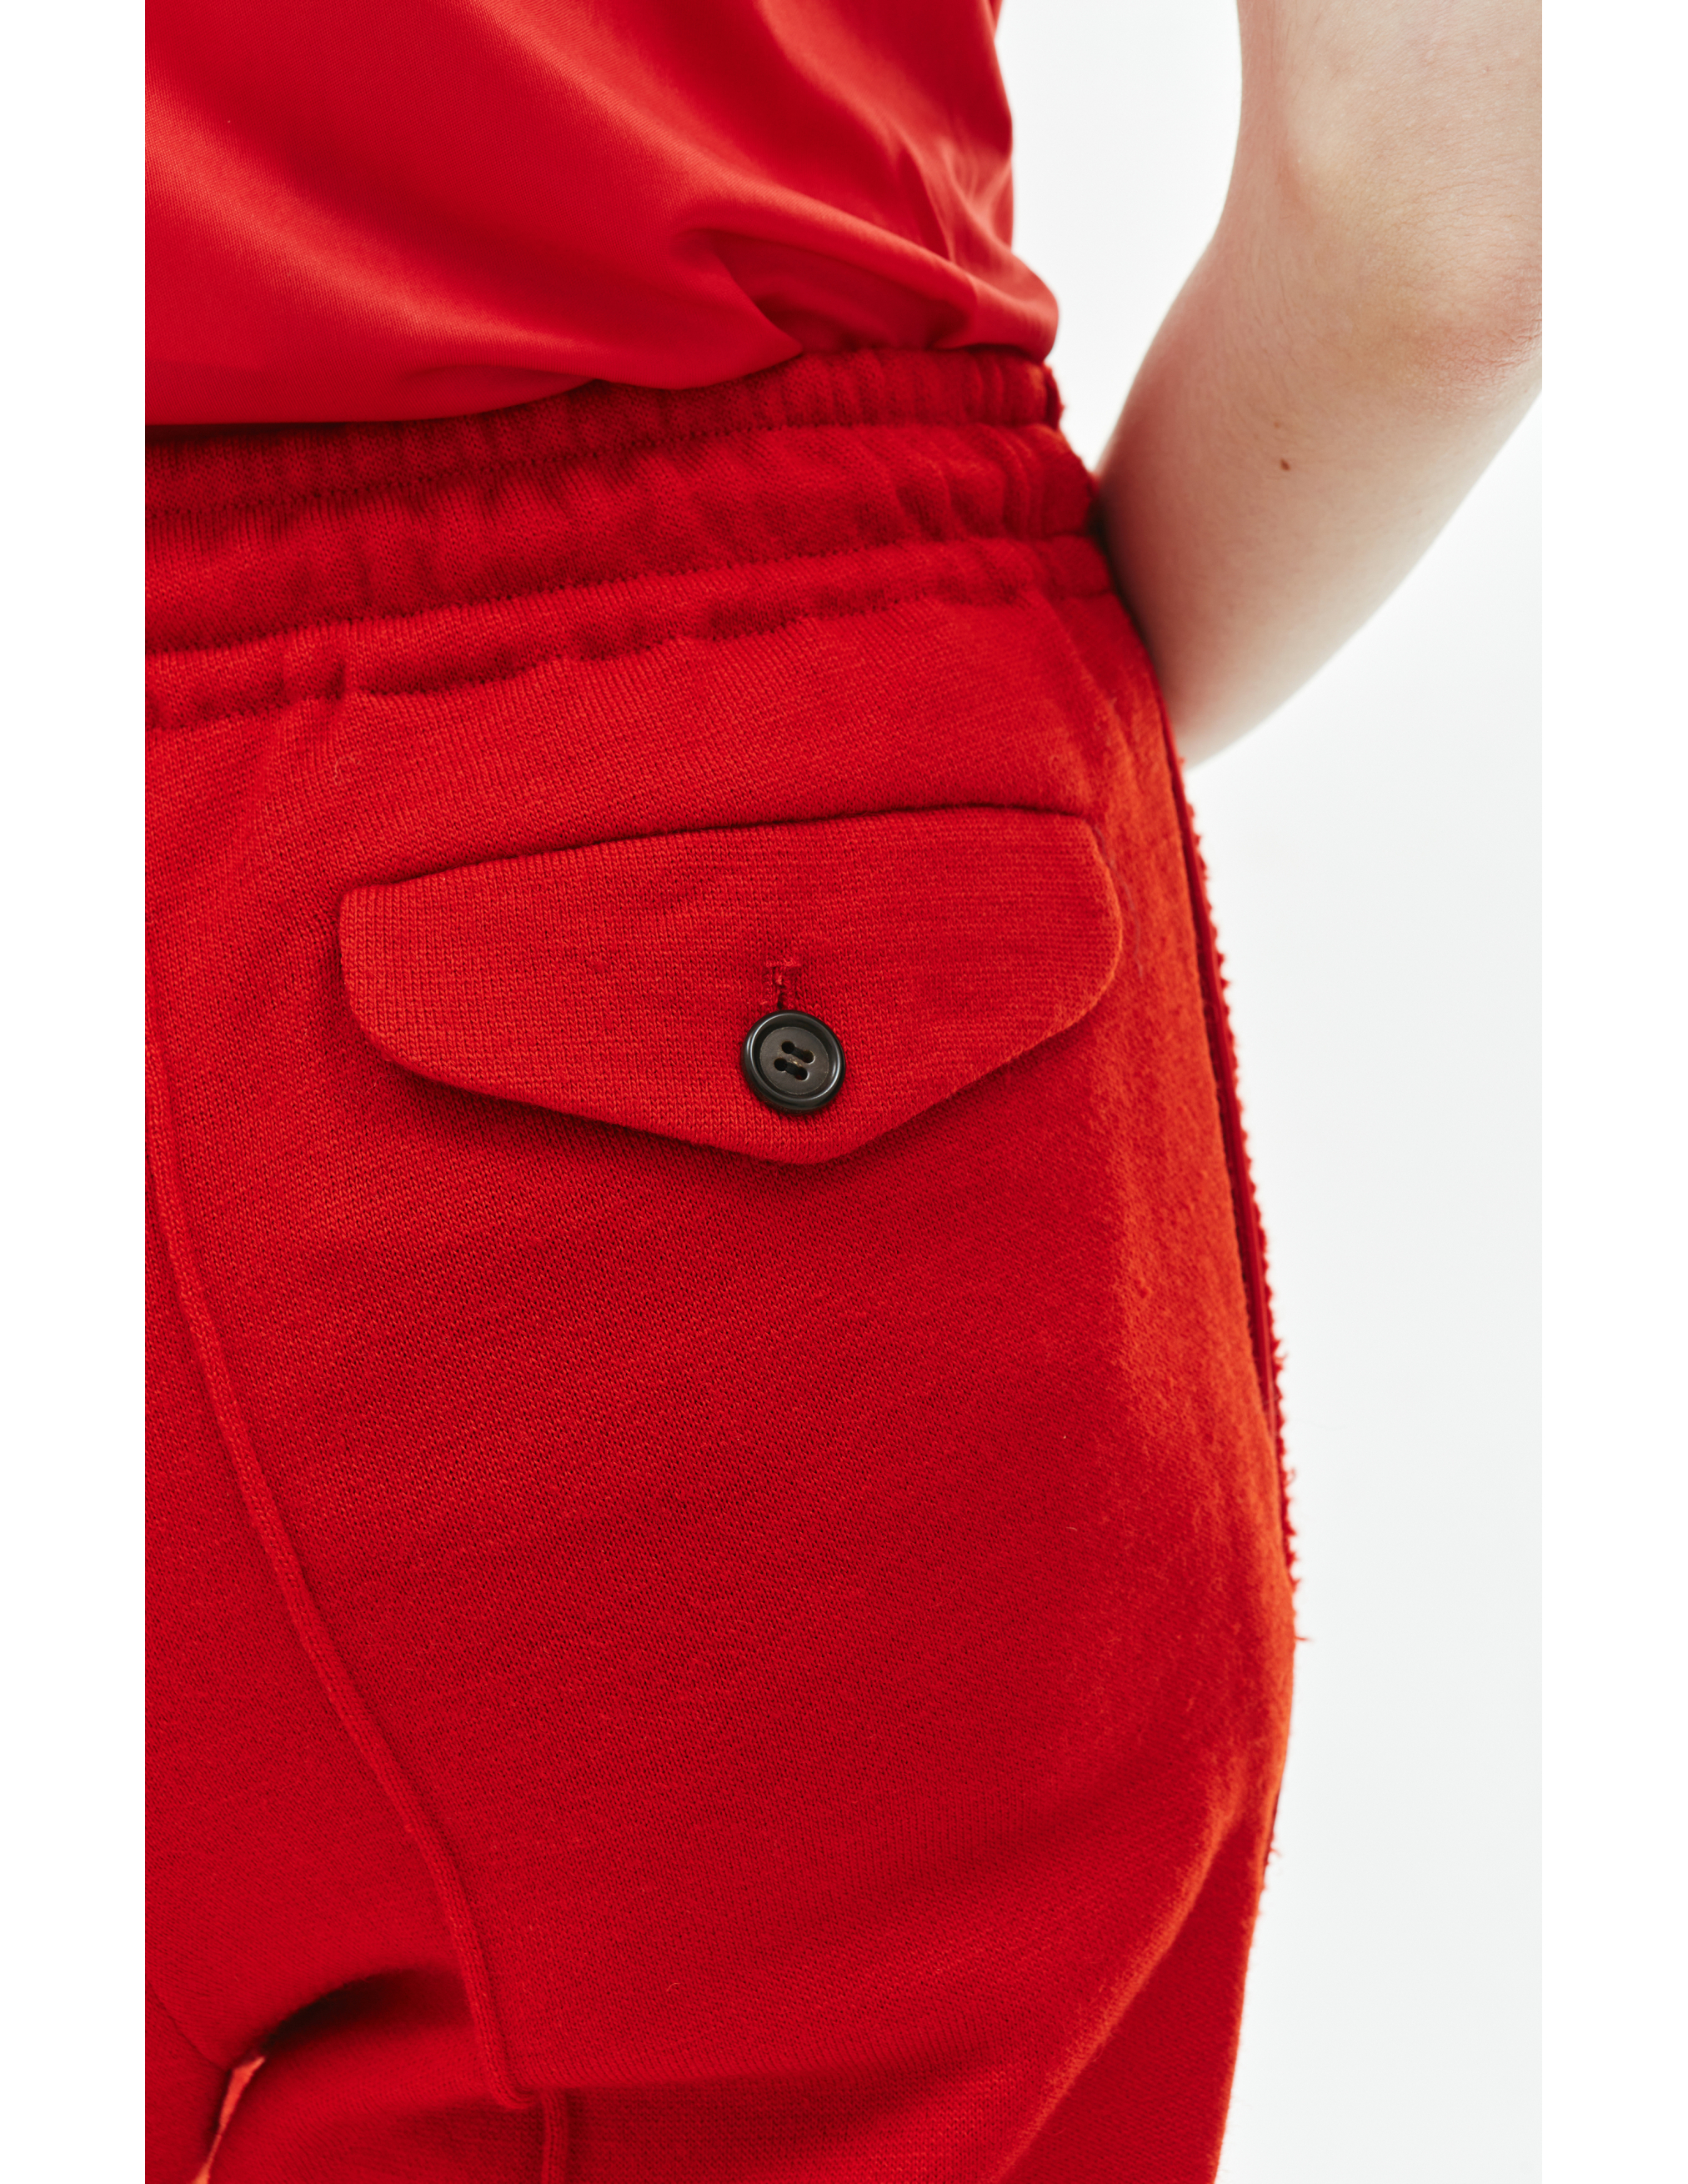 Красные шерстяные брюки Undercover UCX1503/red, размер 3;2 UCX1503/red - фото 4